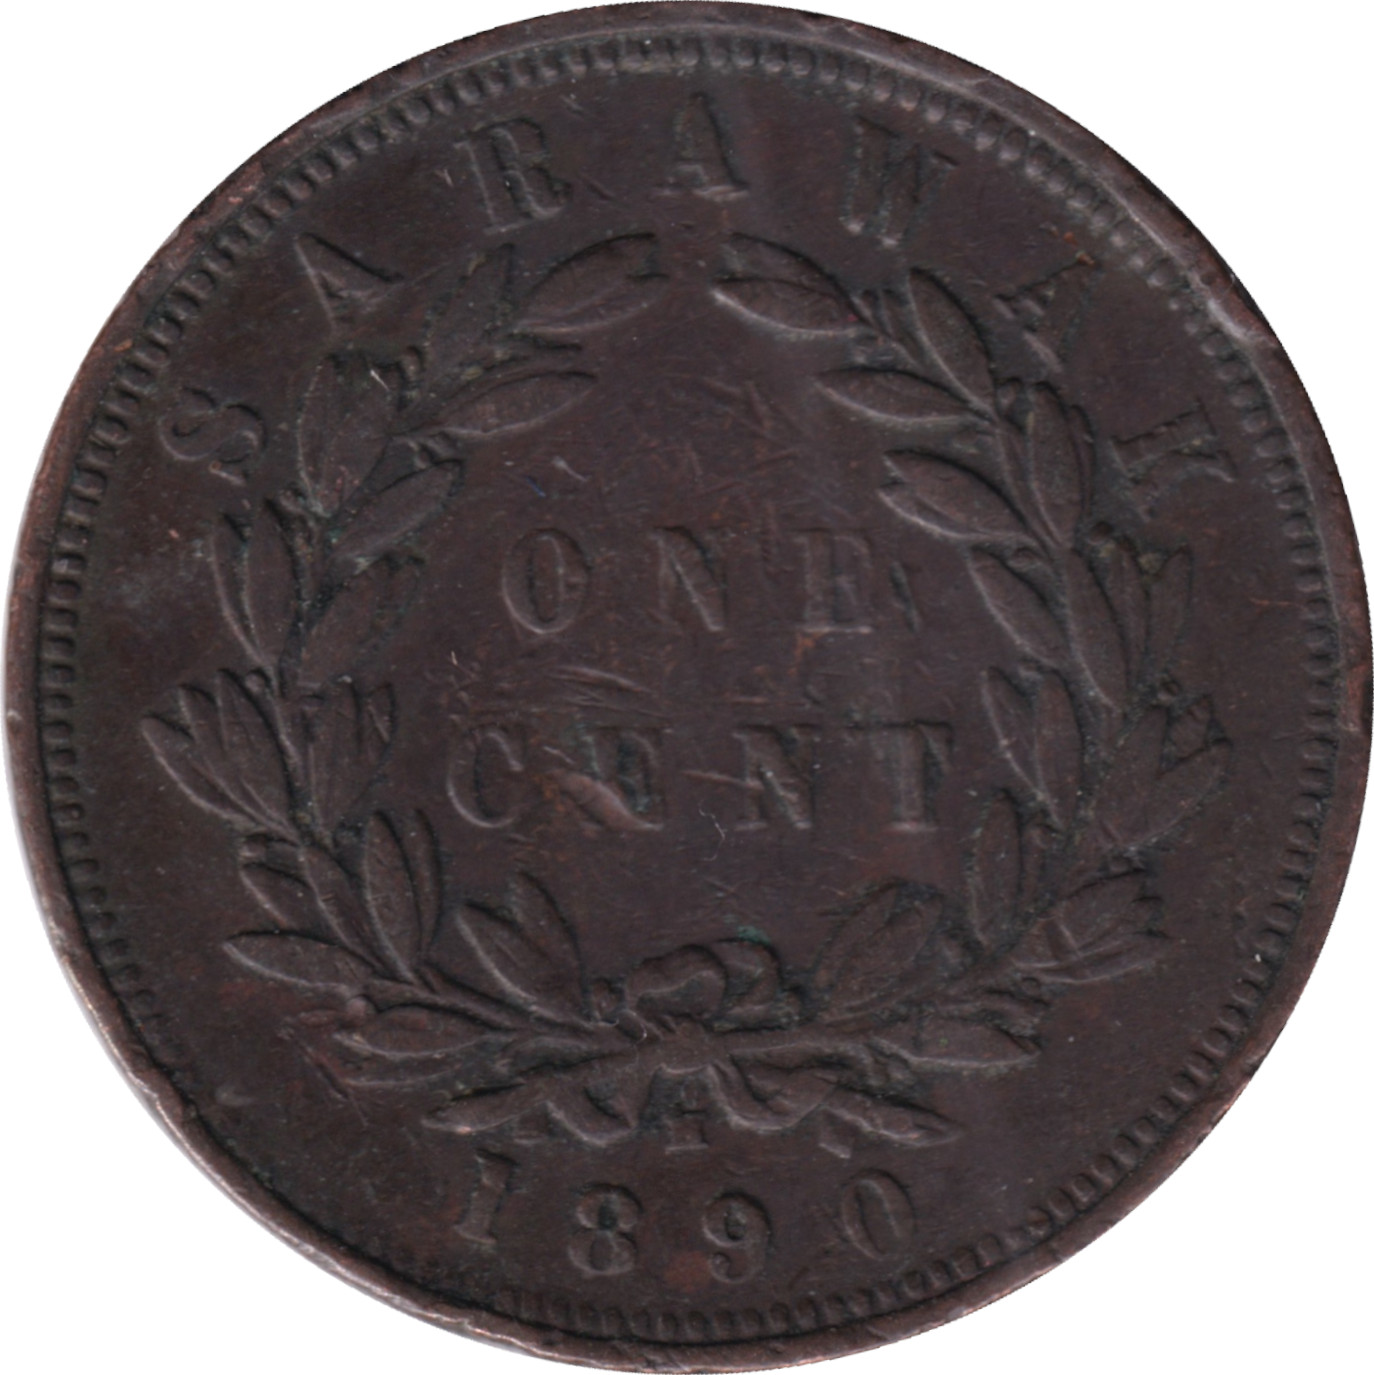 1 cent - Charles J. Brooke • Type 1